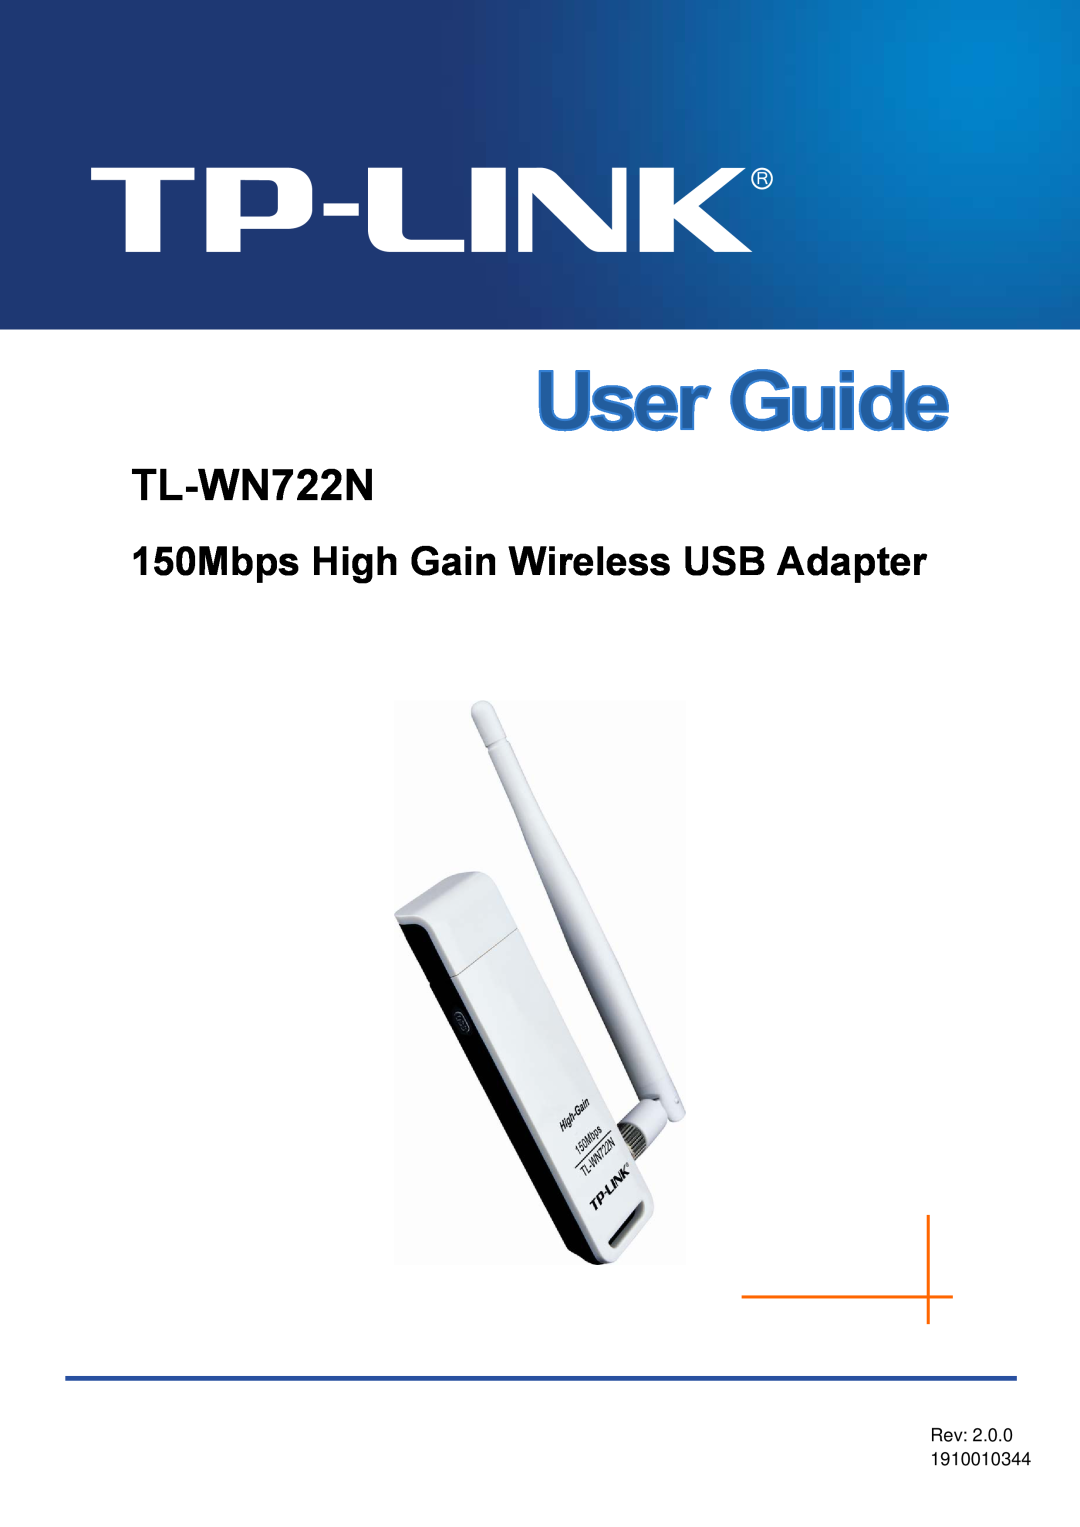 TP-Link TL-WN722N manual 150Mbps High Gain Wireless USB Adapter, Rev 2.0.0 